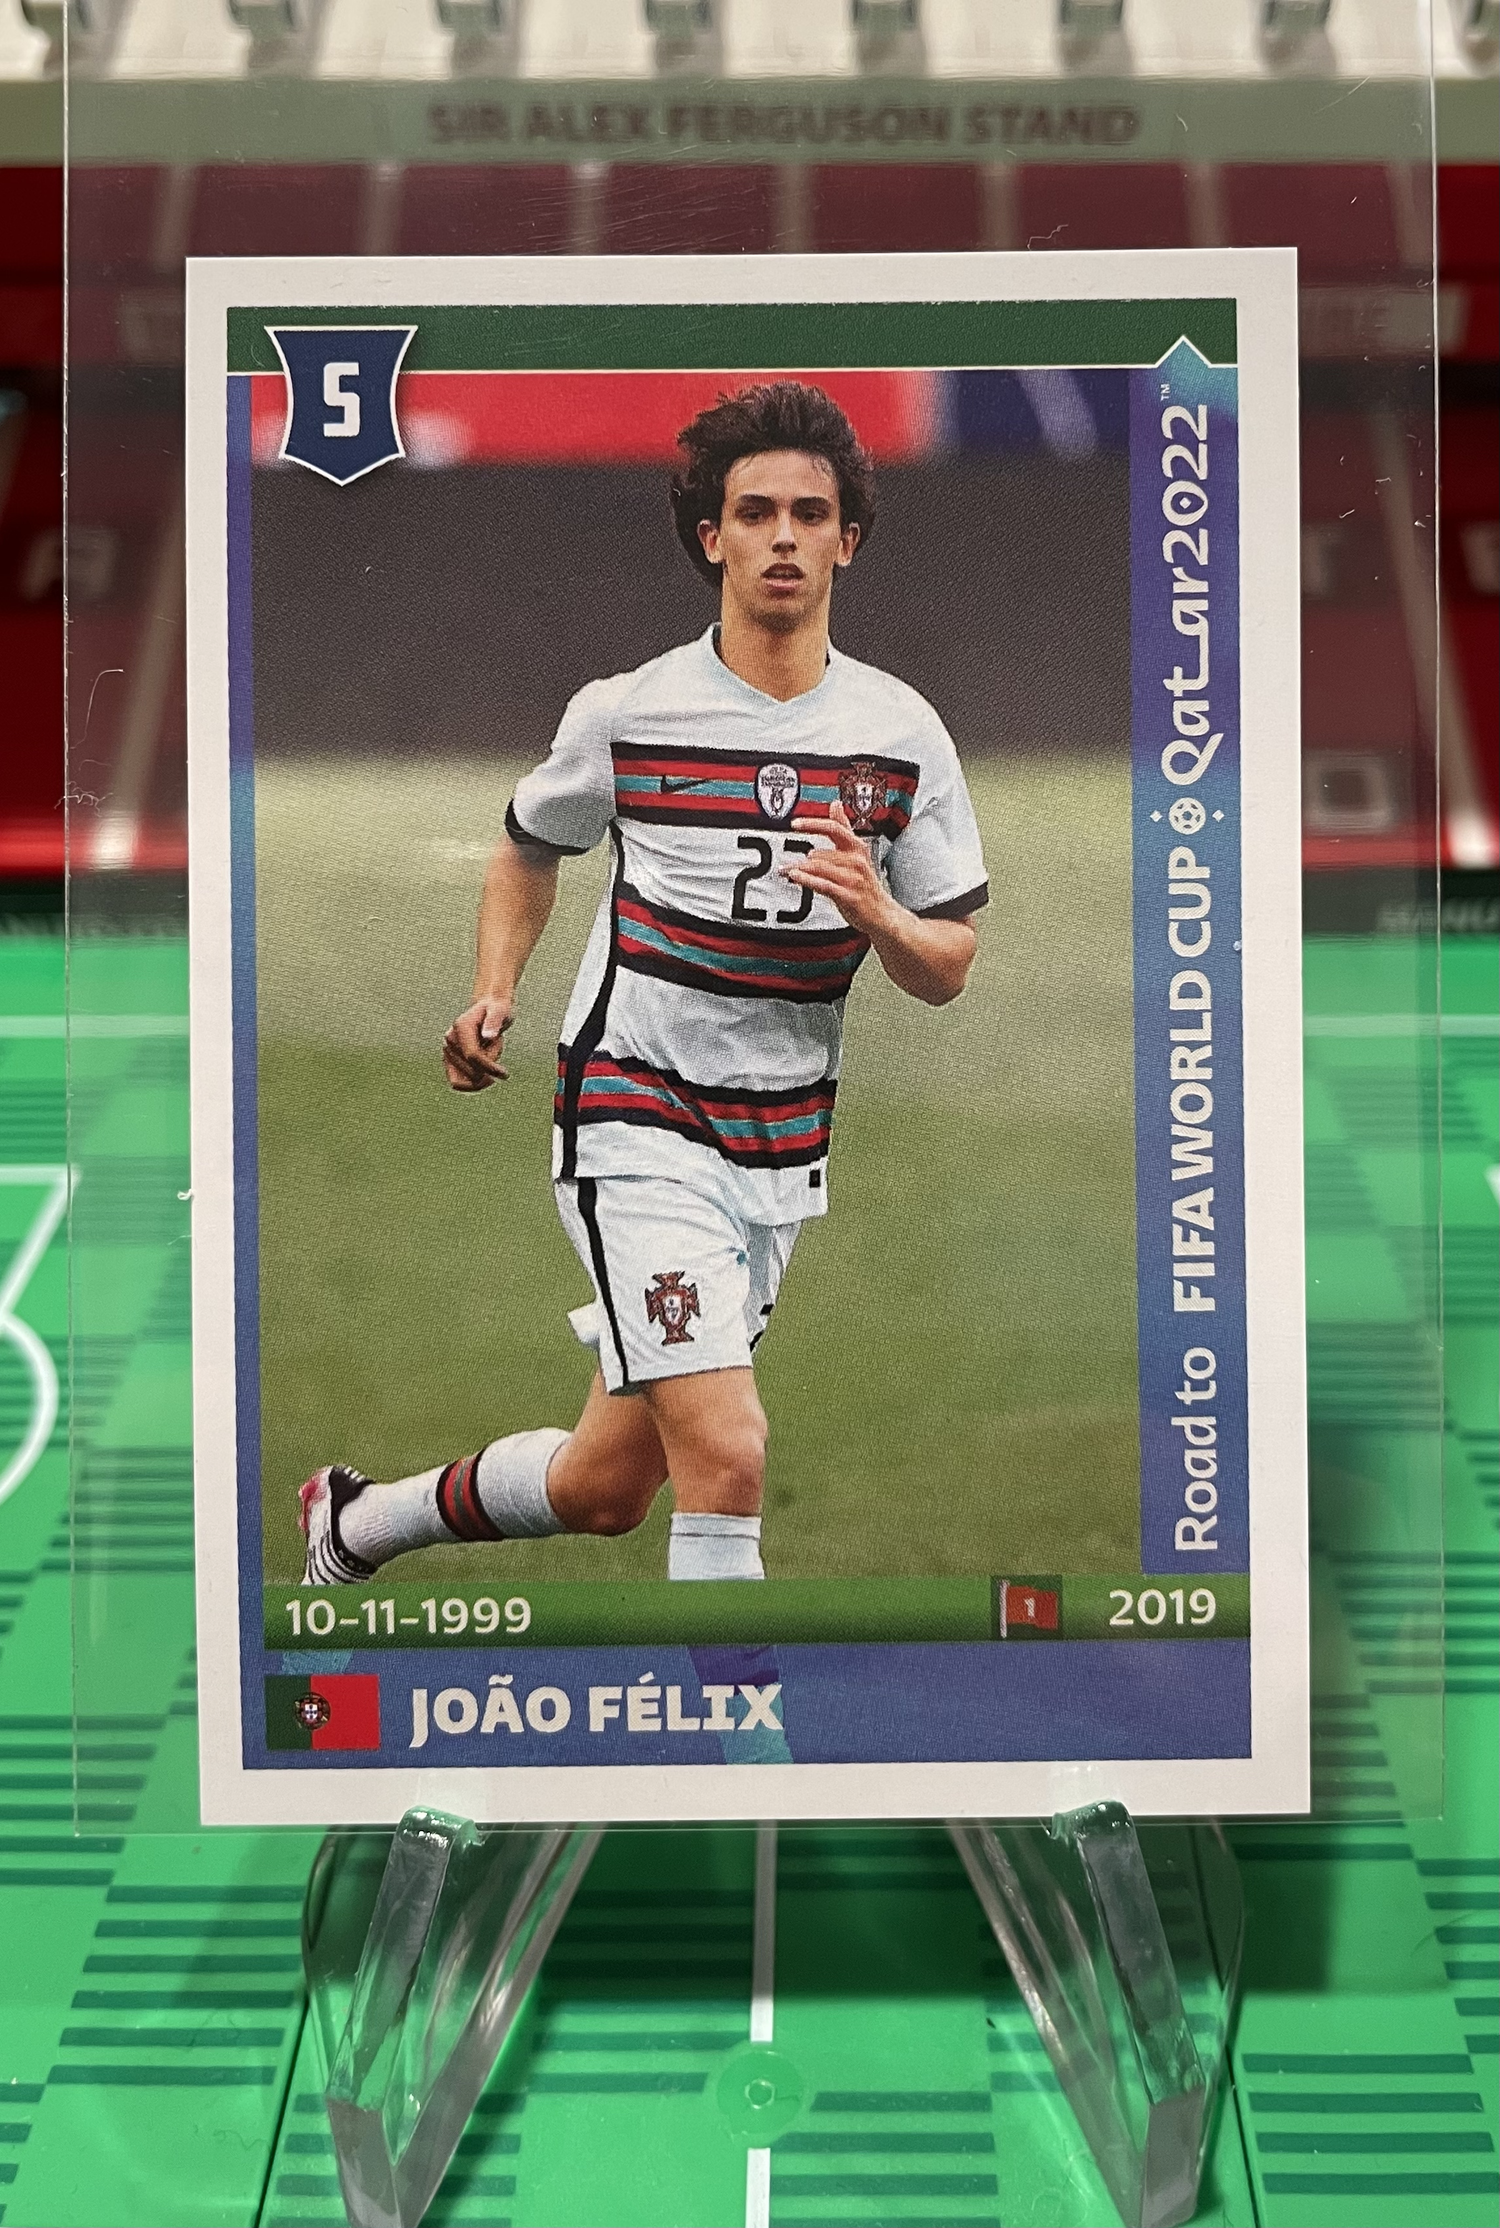 Joao Felix Soccer Cards — Autonomously Driving